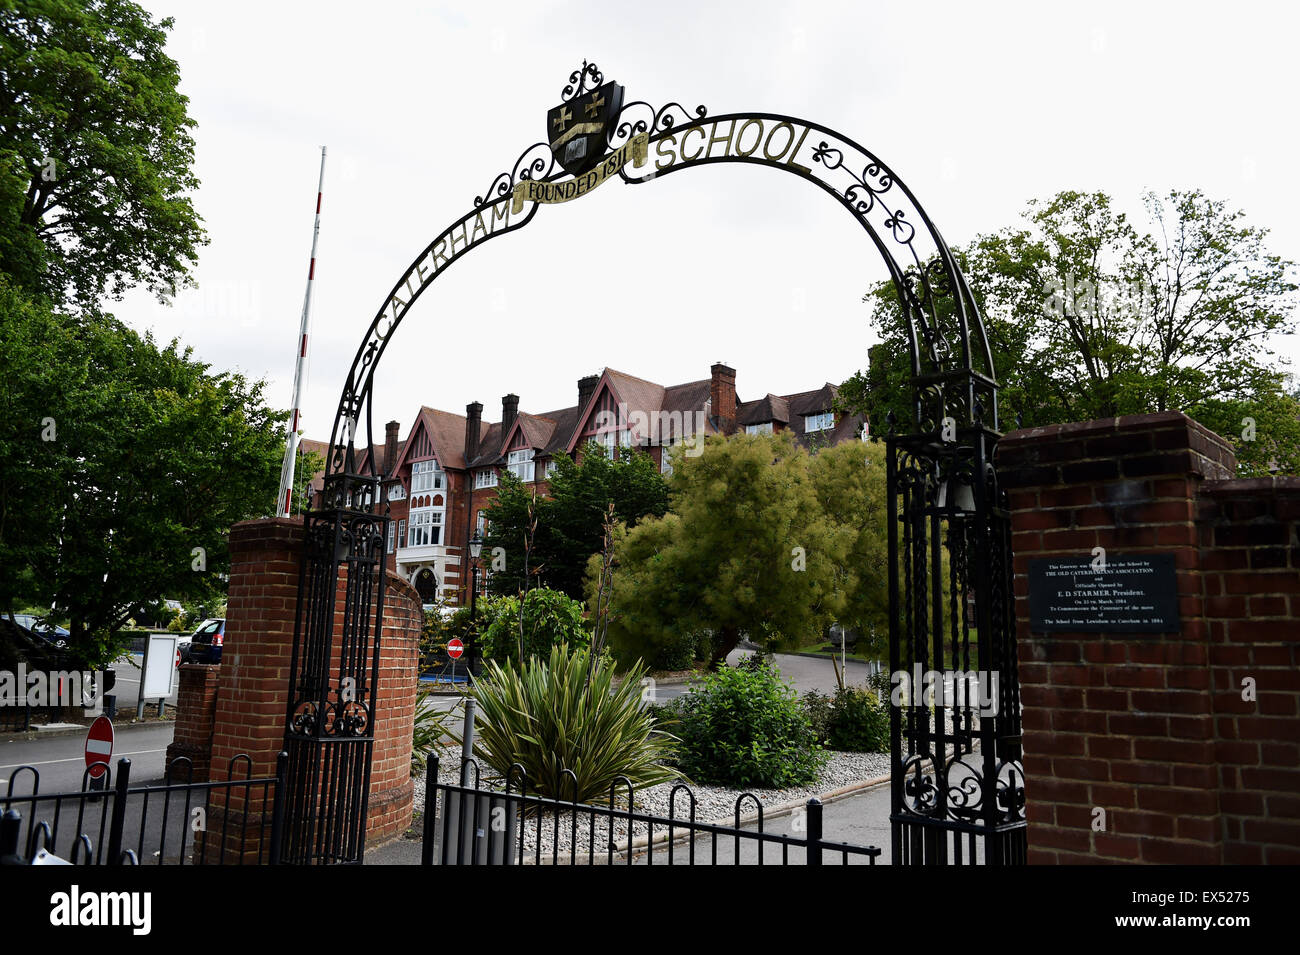 Caterham School eine koedukative Privatschule in Surrey England UK Stockfoto